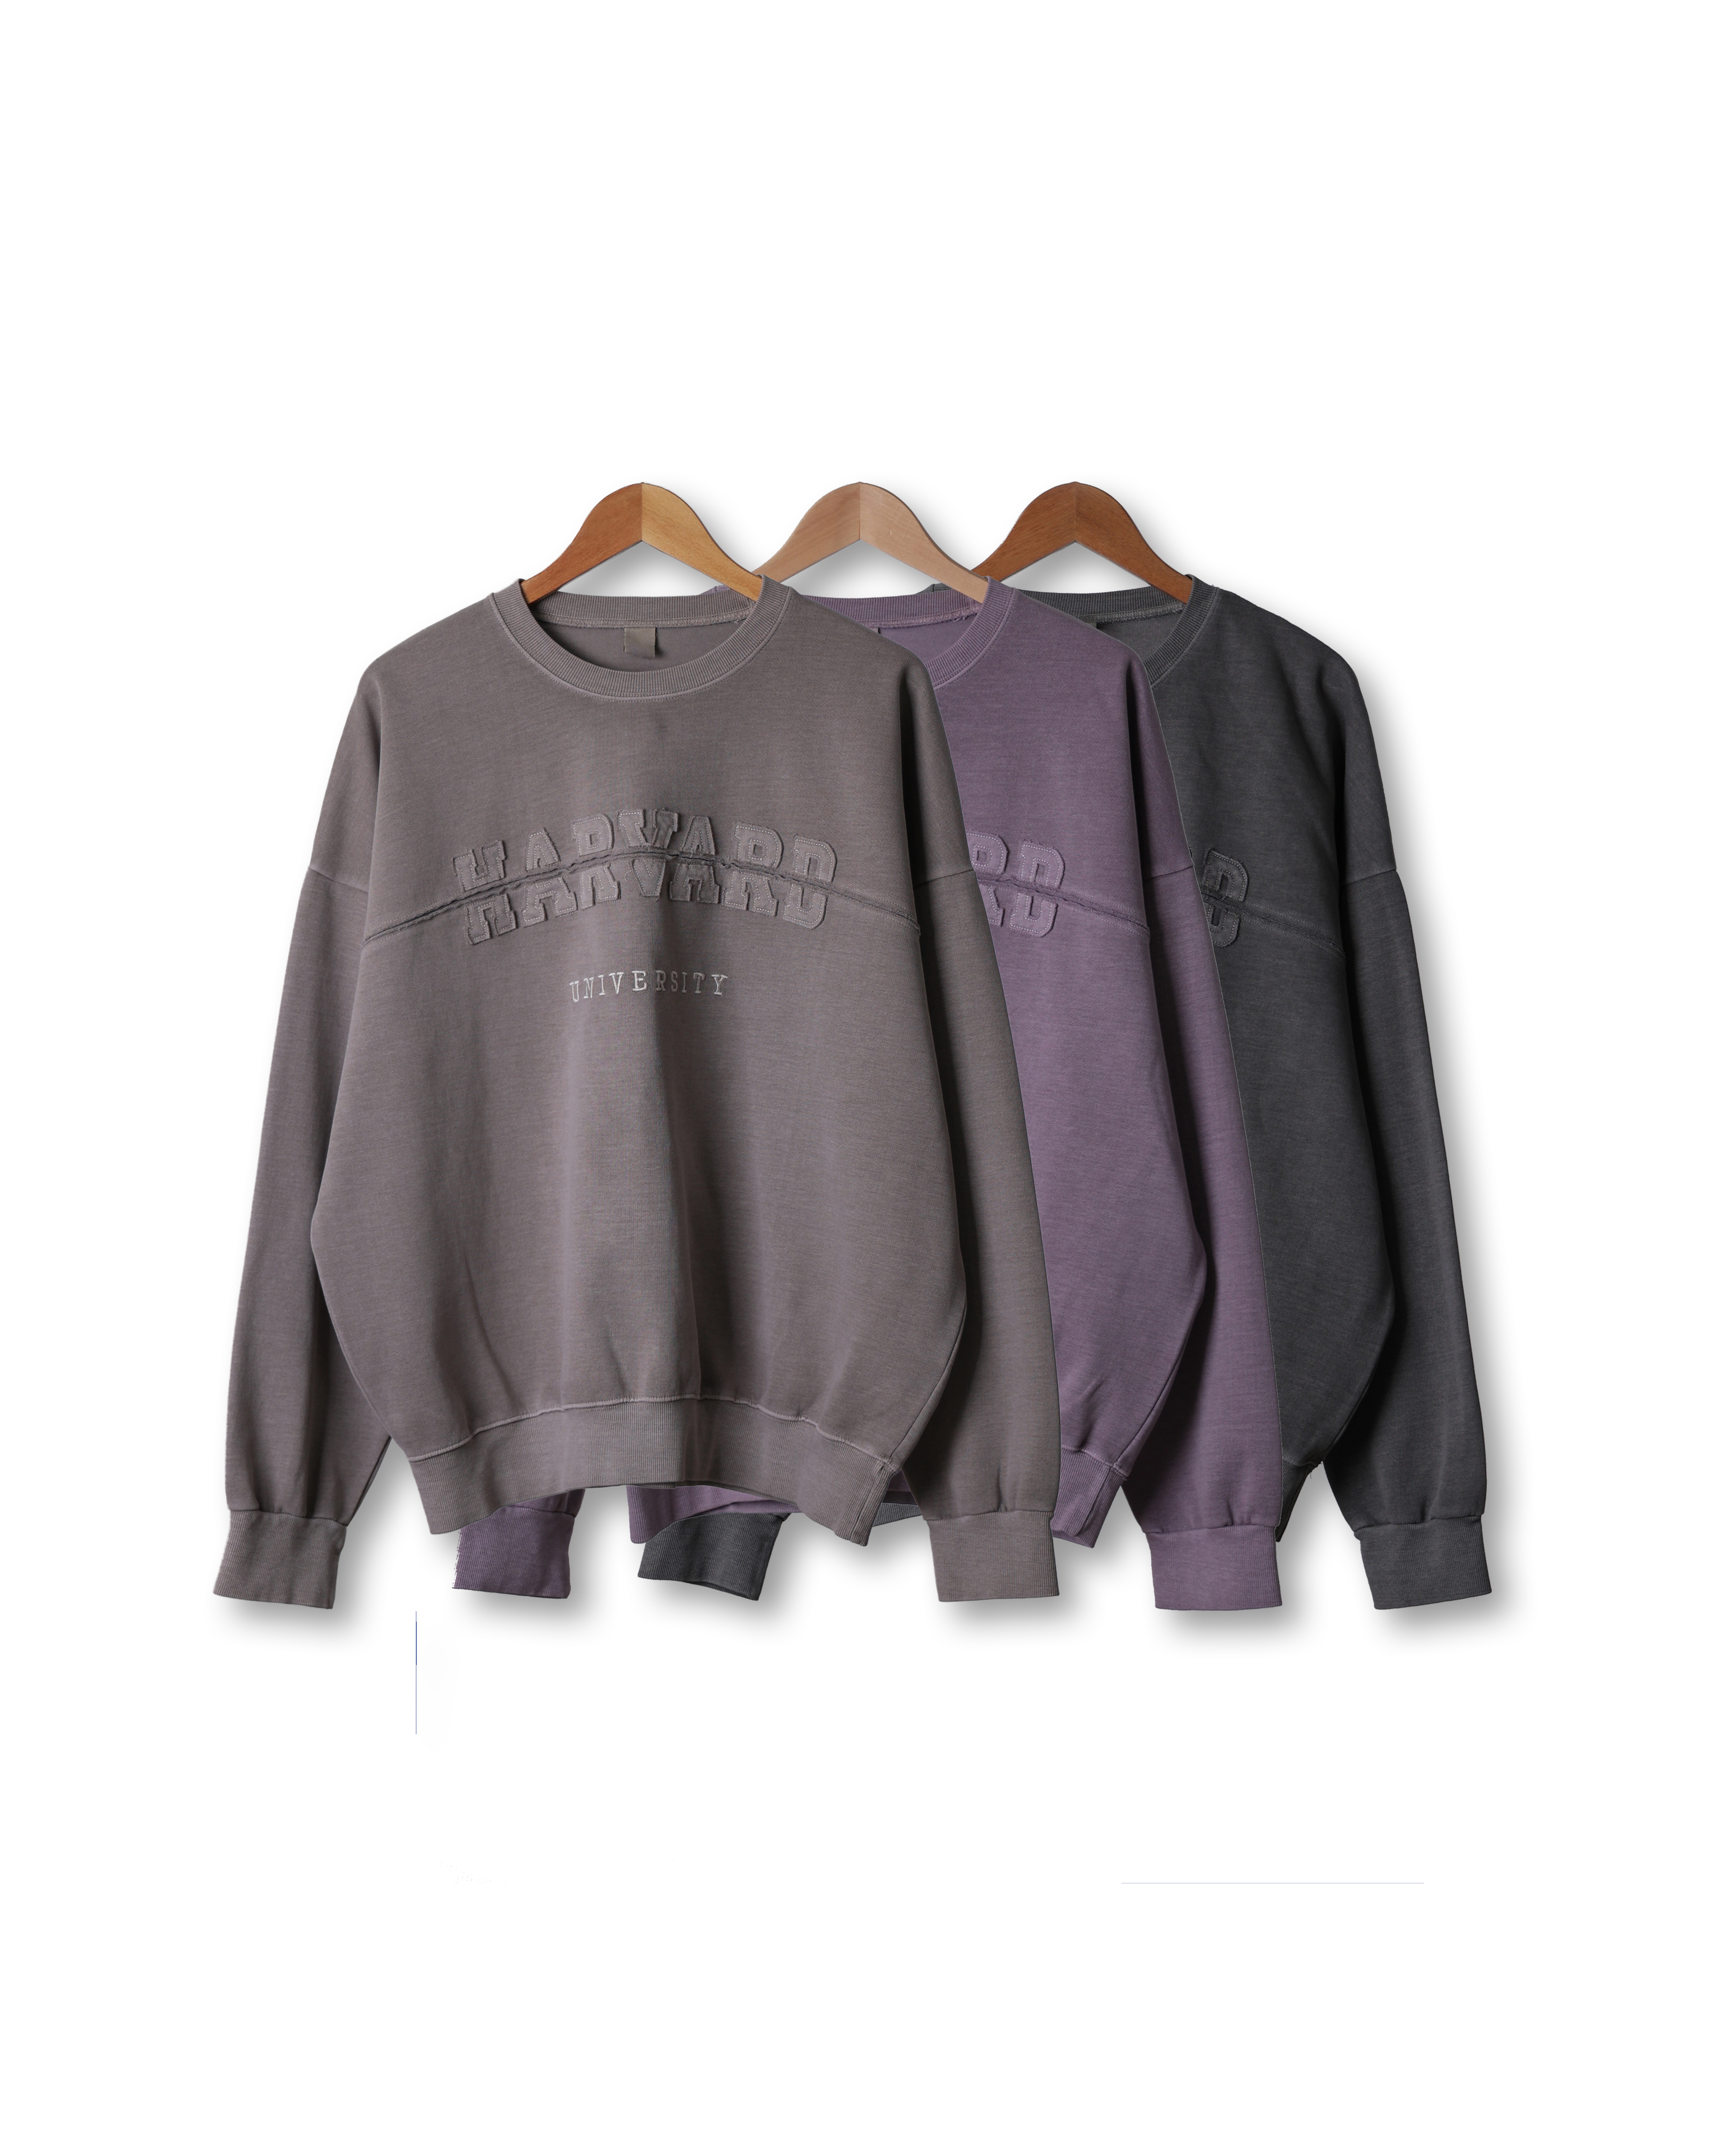 RARA HARVARD Pigments Cutted Sweat Shirts (Charcoal/Light Purple/Deep Beige)